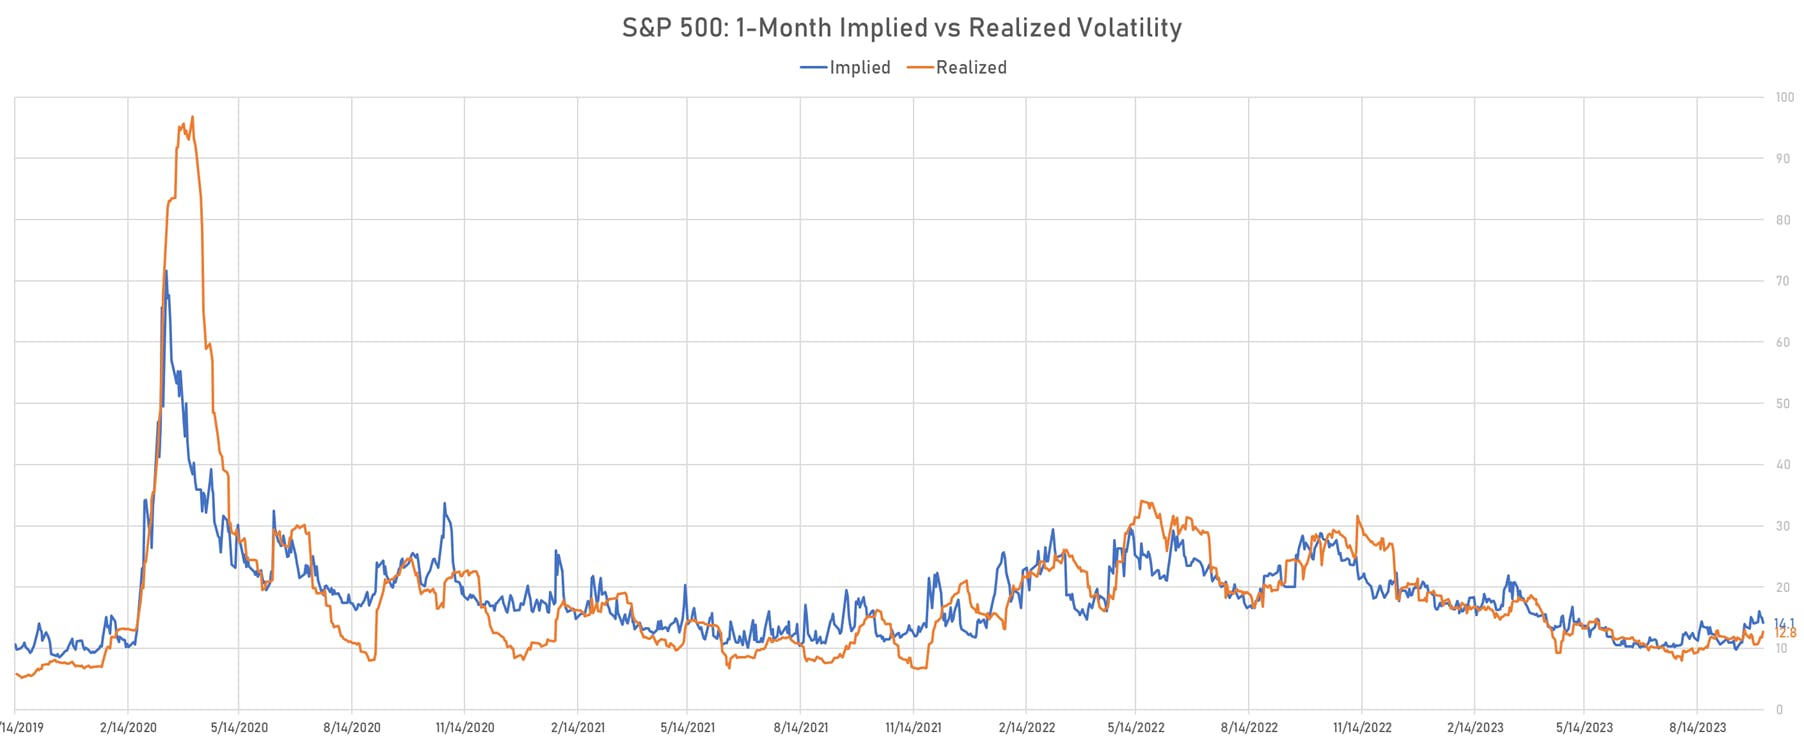 1-month implied vs realized | Sources: phipost.com, Refinitiv data